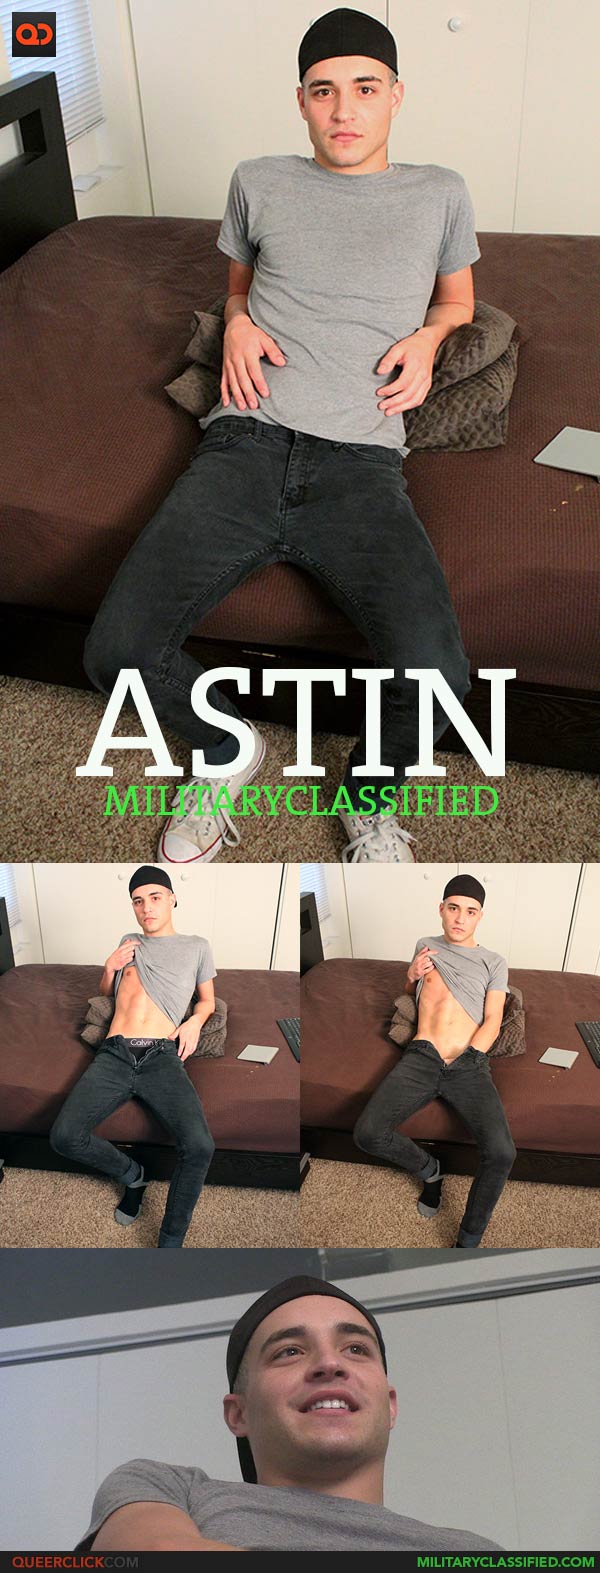 Military Classified: Astin